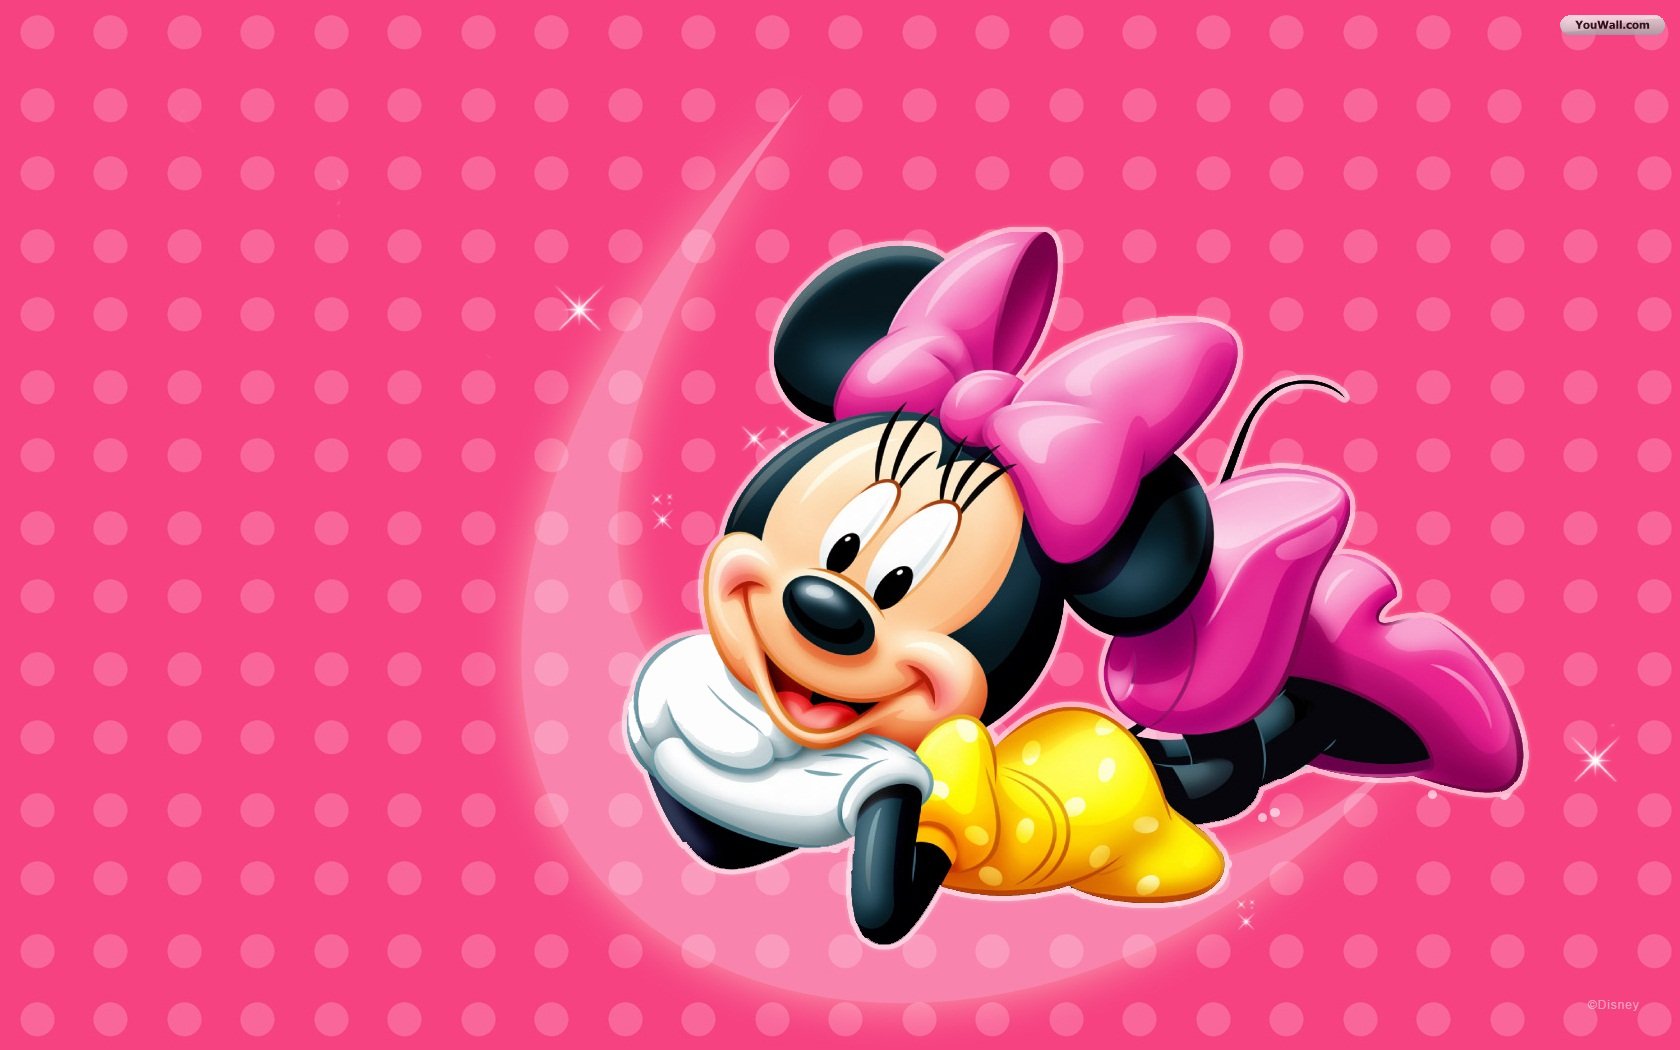 50+] Minnie Mouse Wallpaper for iPad - WallpaperSafari